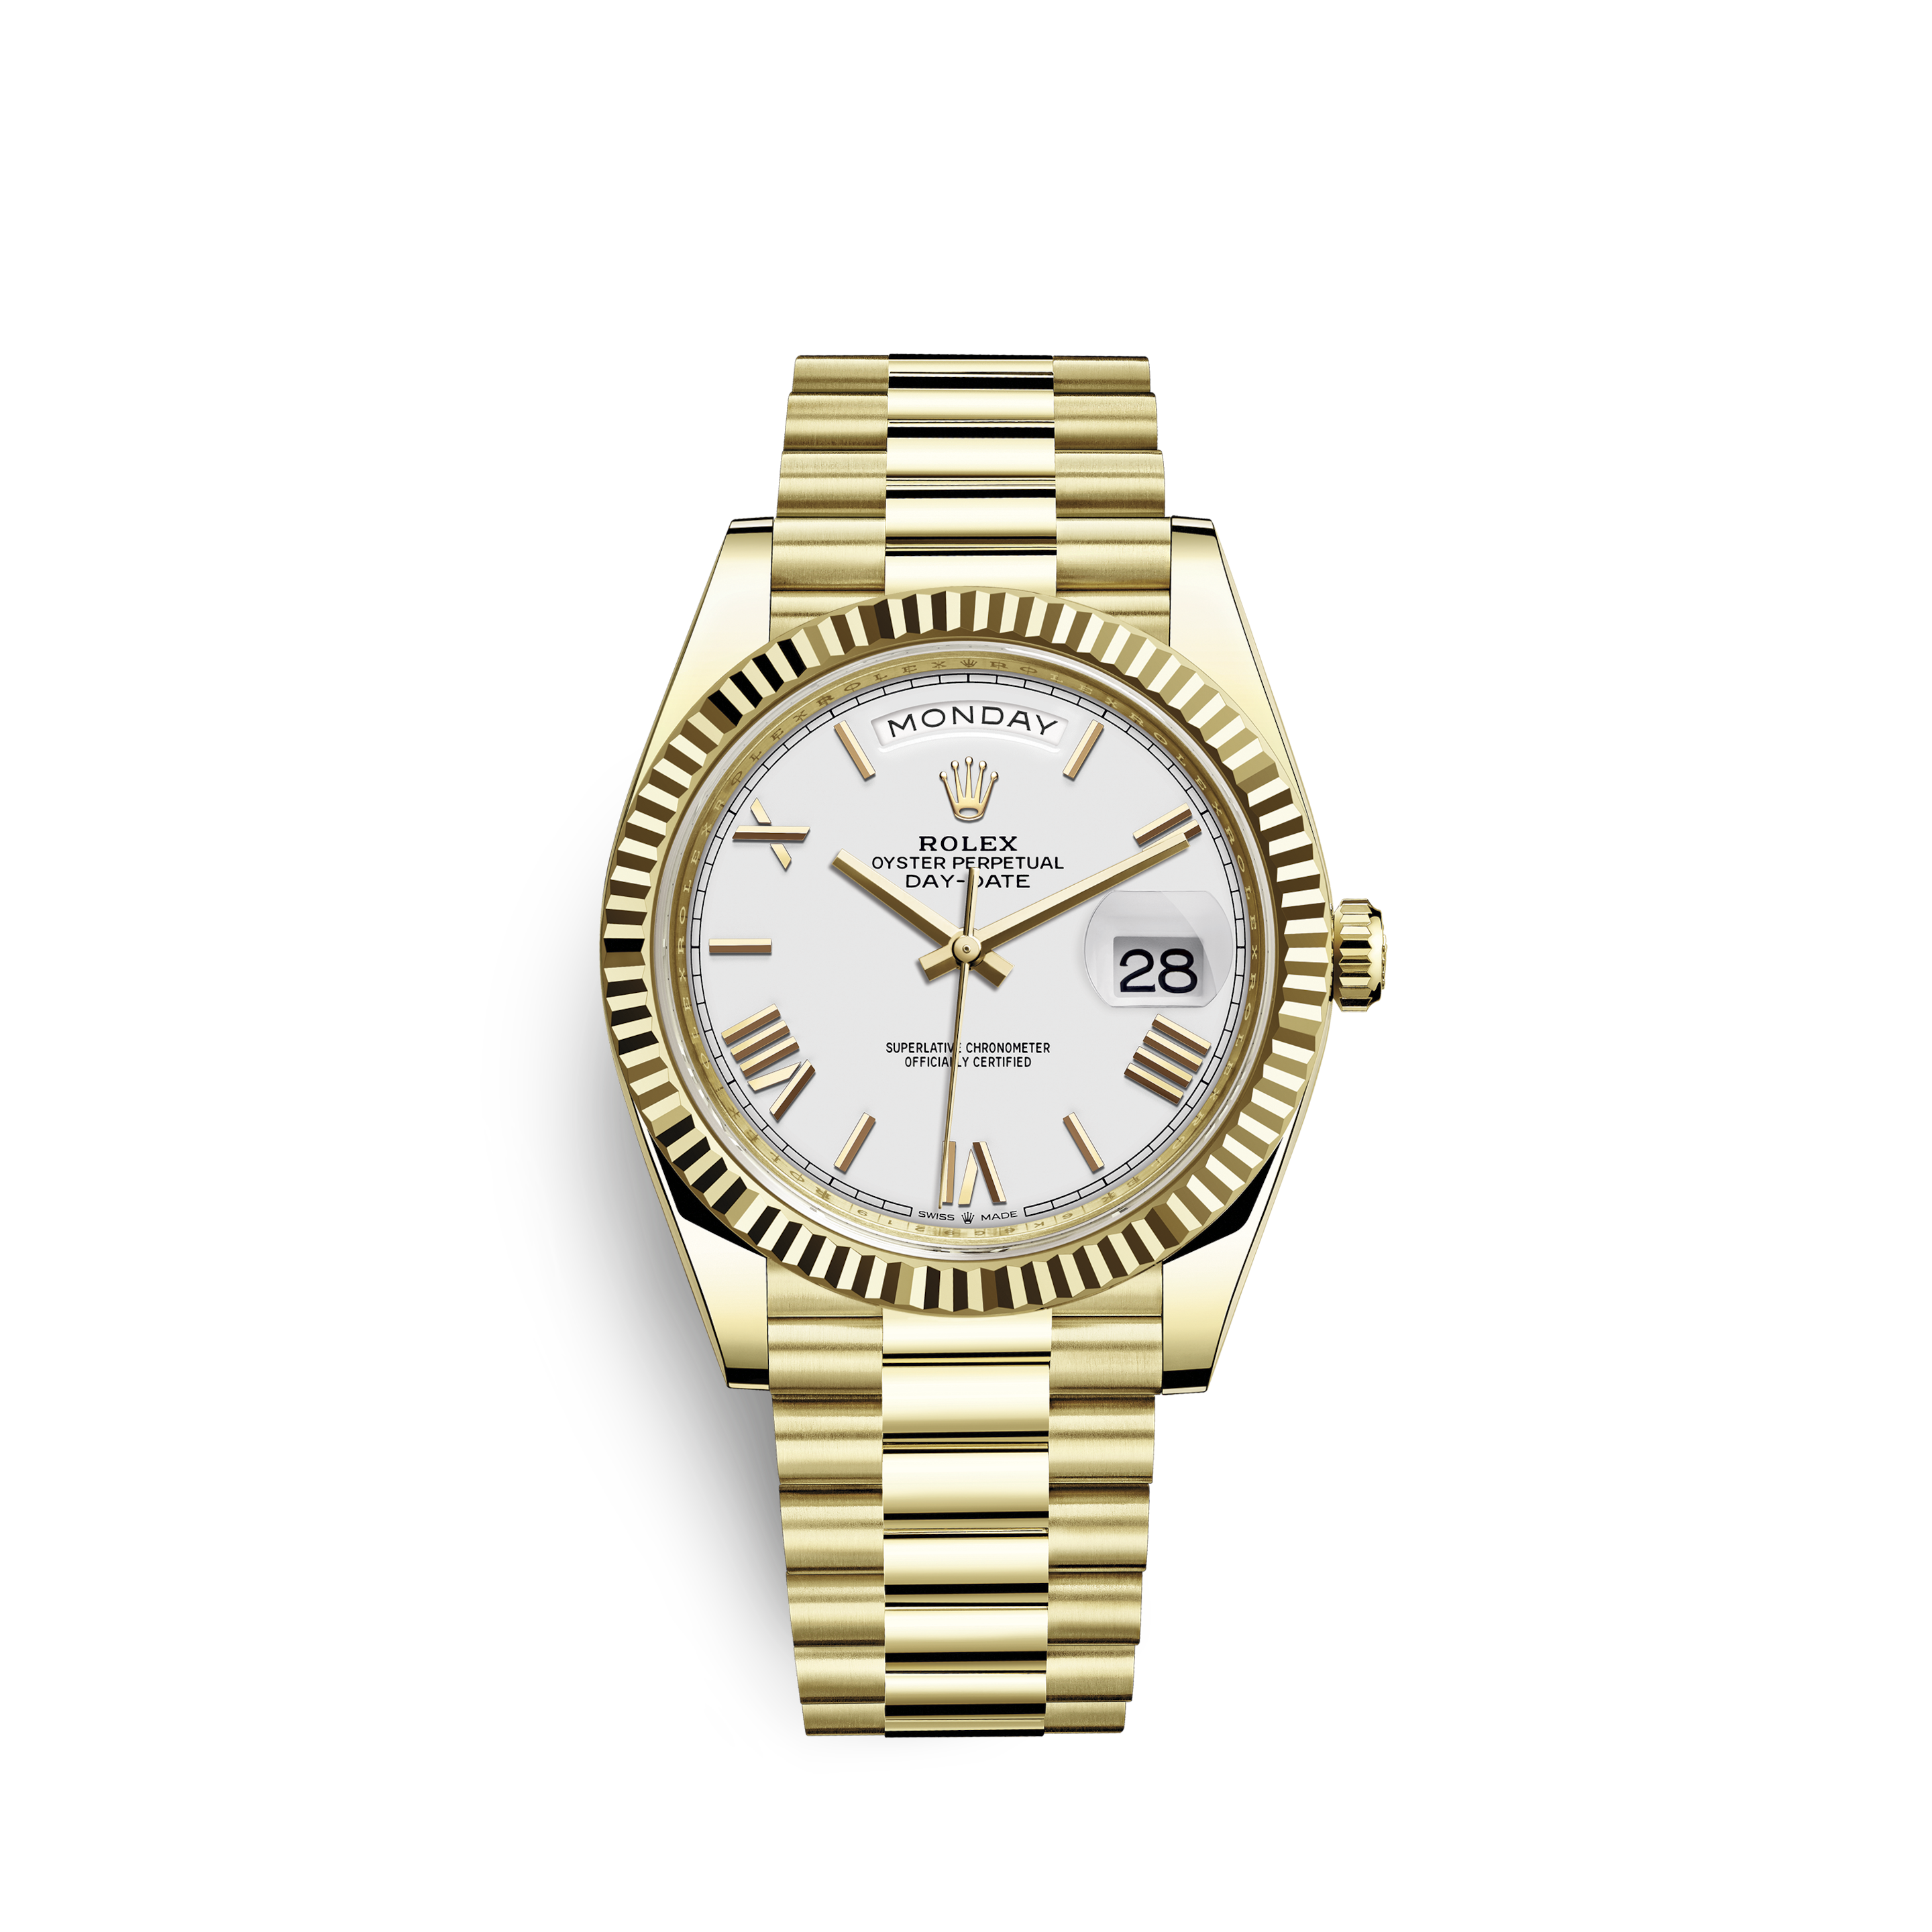 Rolex Day-Date - La montre de prestige 